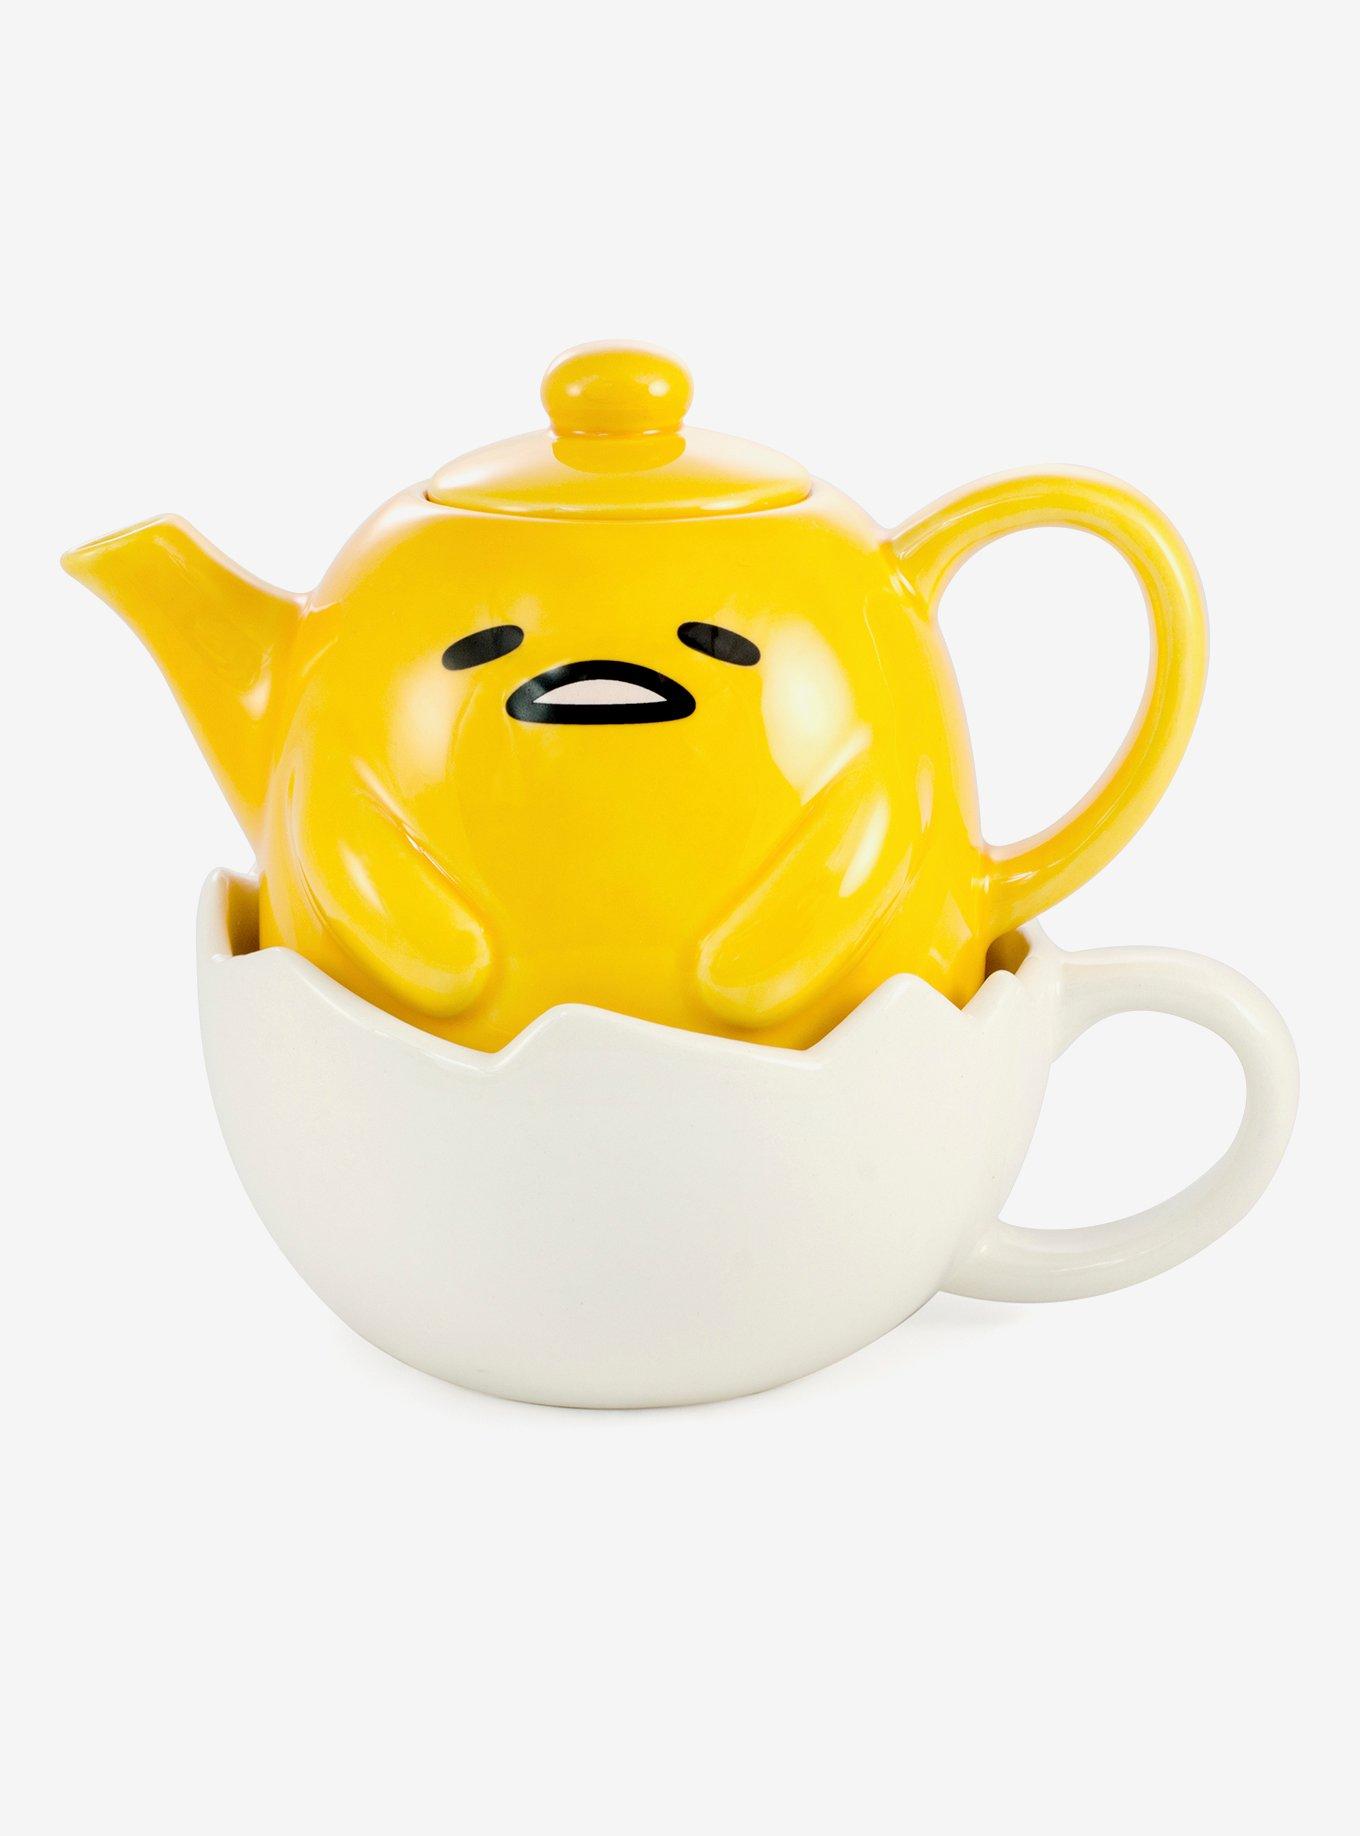 Anime Sanrio Hello Kitty Ceramic Teacup Teapot Saucer Creative